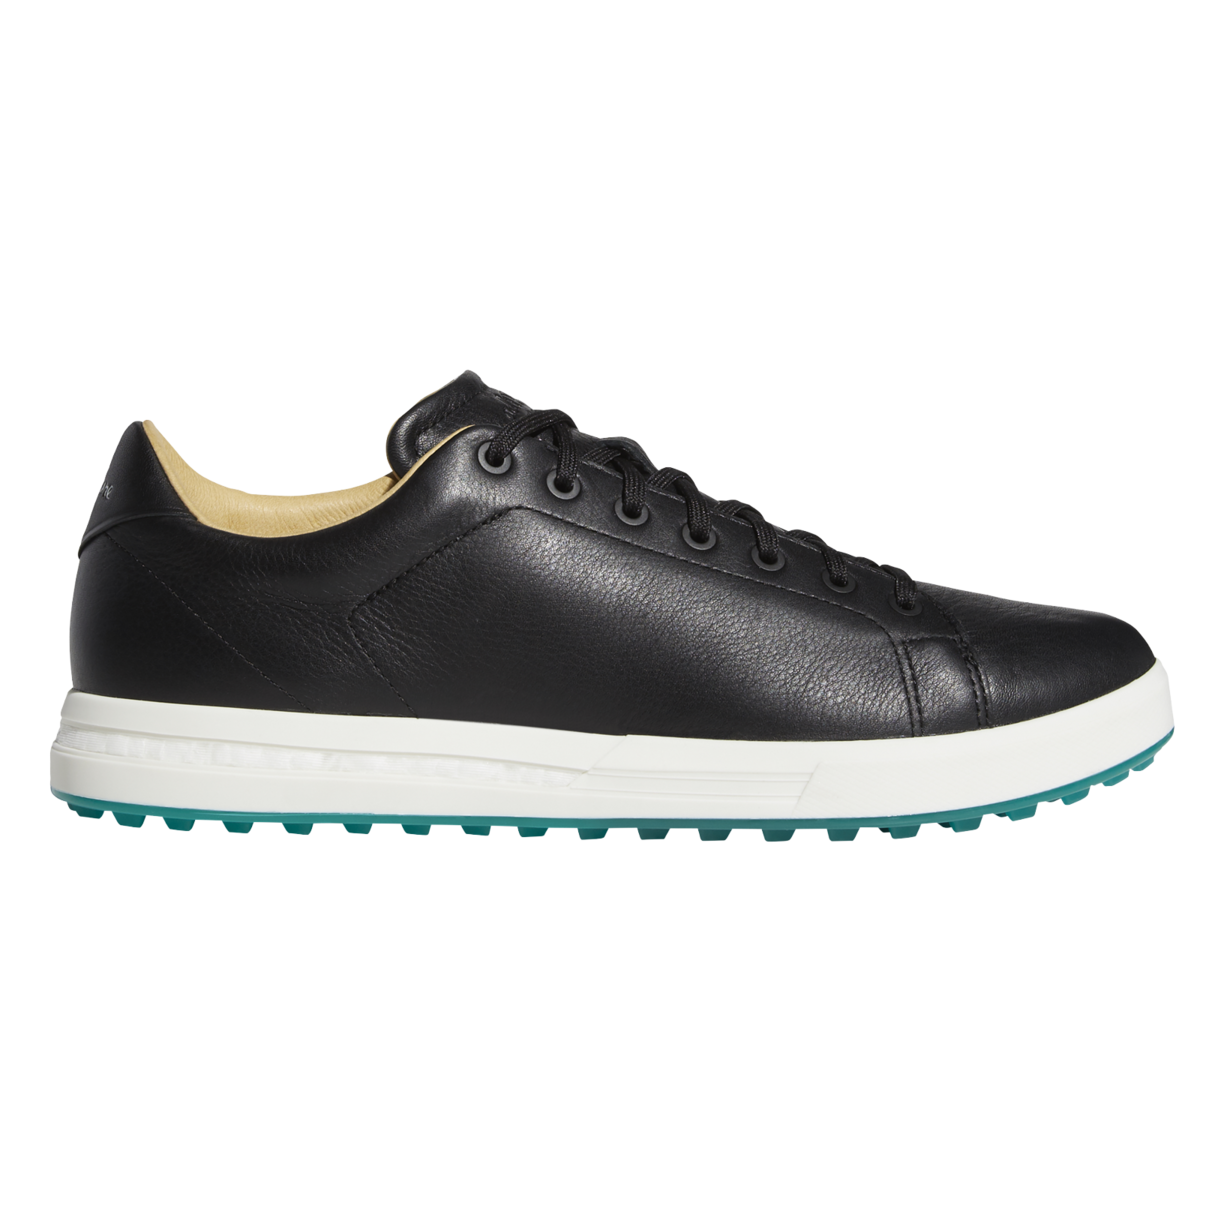 Adipure SP 2 Men's Golf Shoe - Black/White قوة العادات